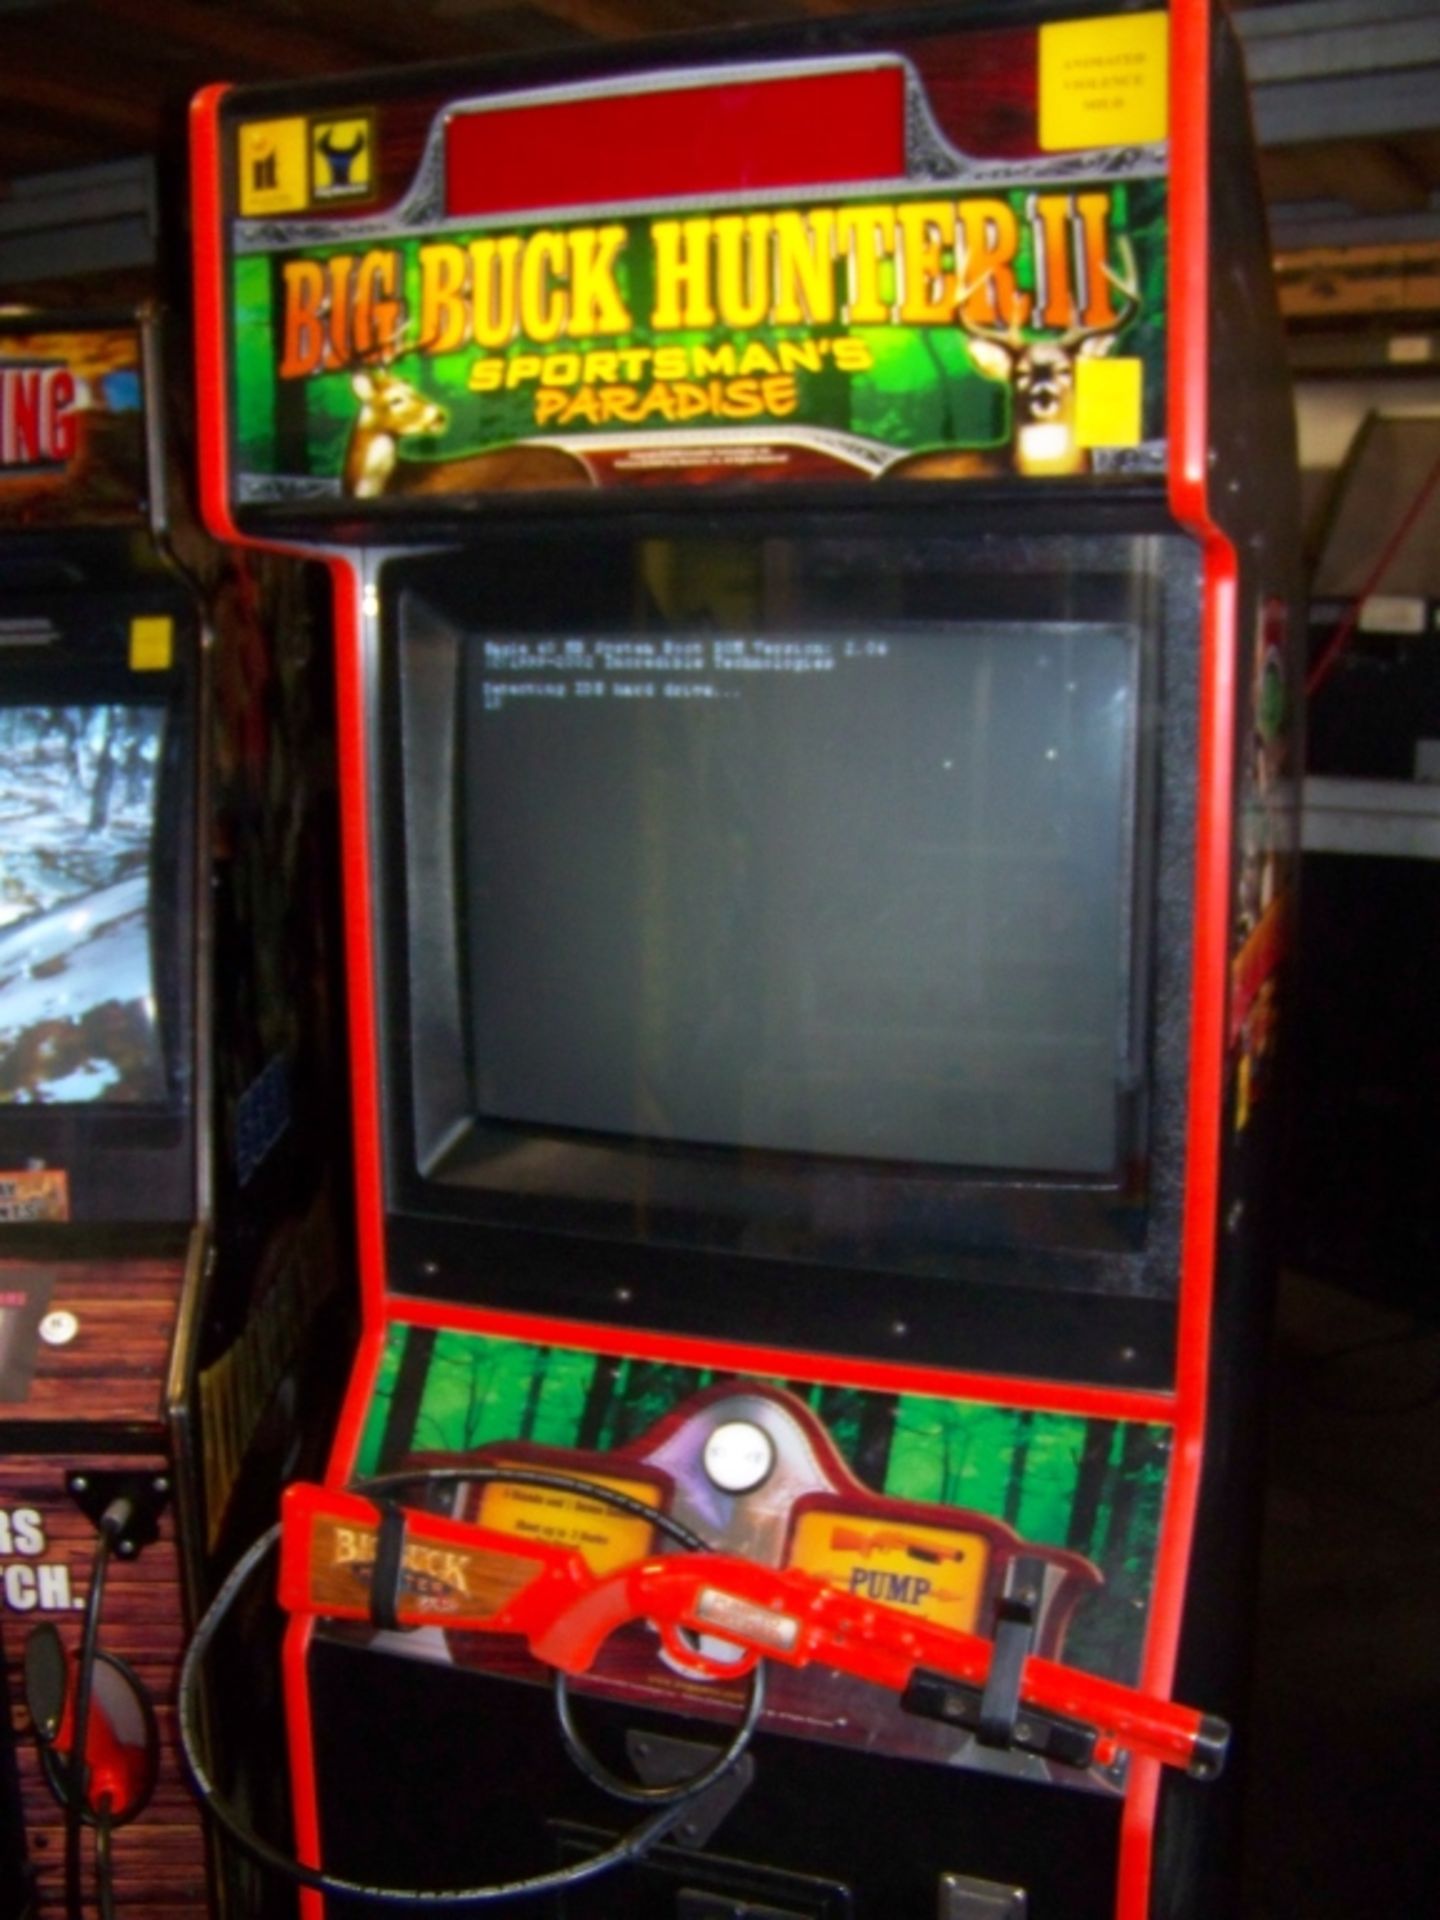 BIG BUCK HUNTER II SPORTSMAN SHOOTER ARCADE GAME - Image 2 of 3